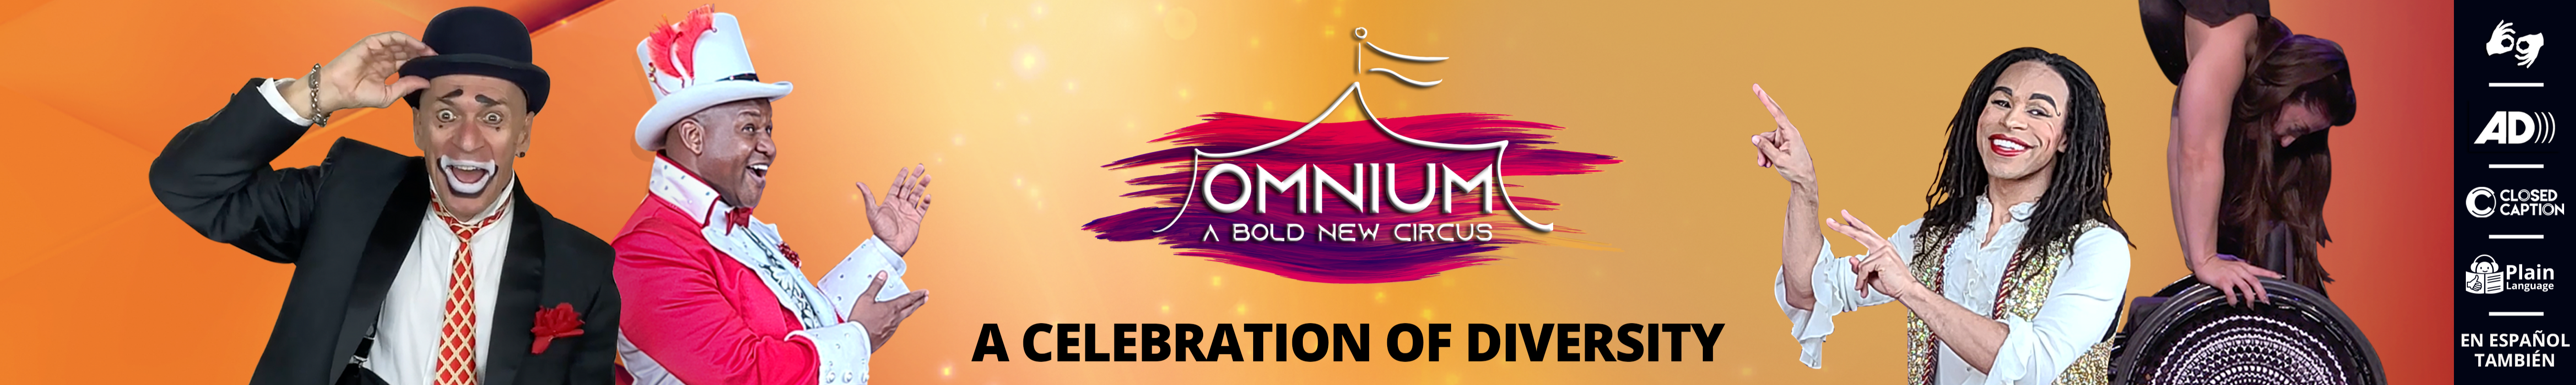 Omnium: A Bold New Circus